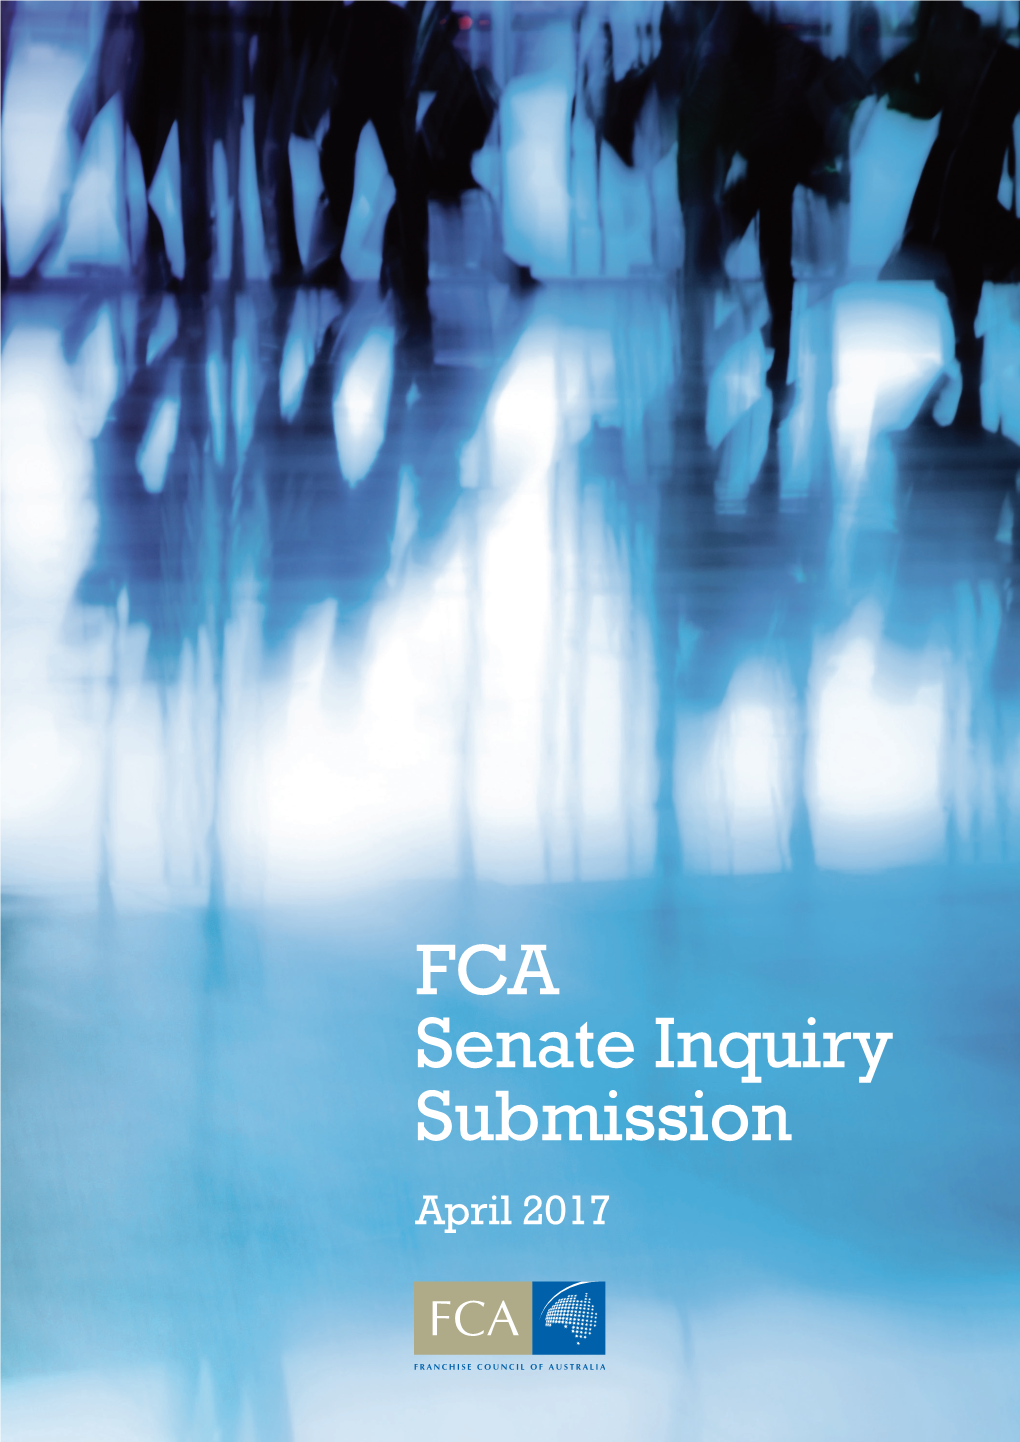 FCA Senate Inquiry Submission April 2017 Contents